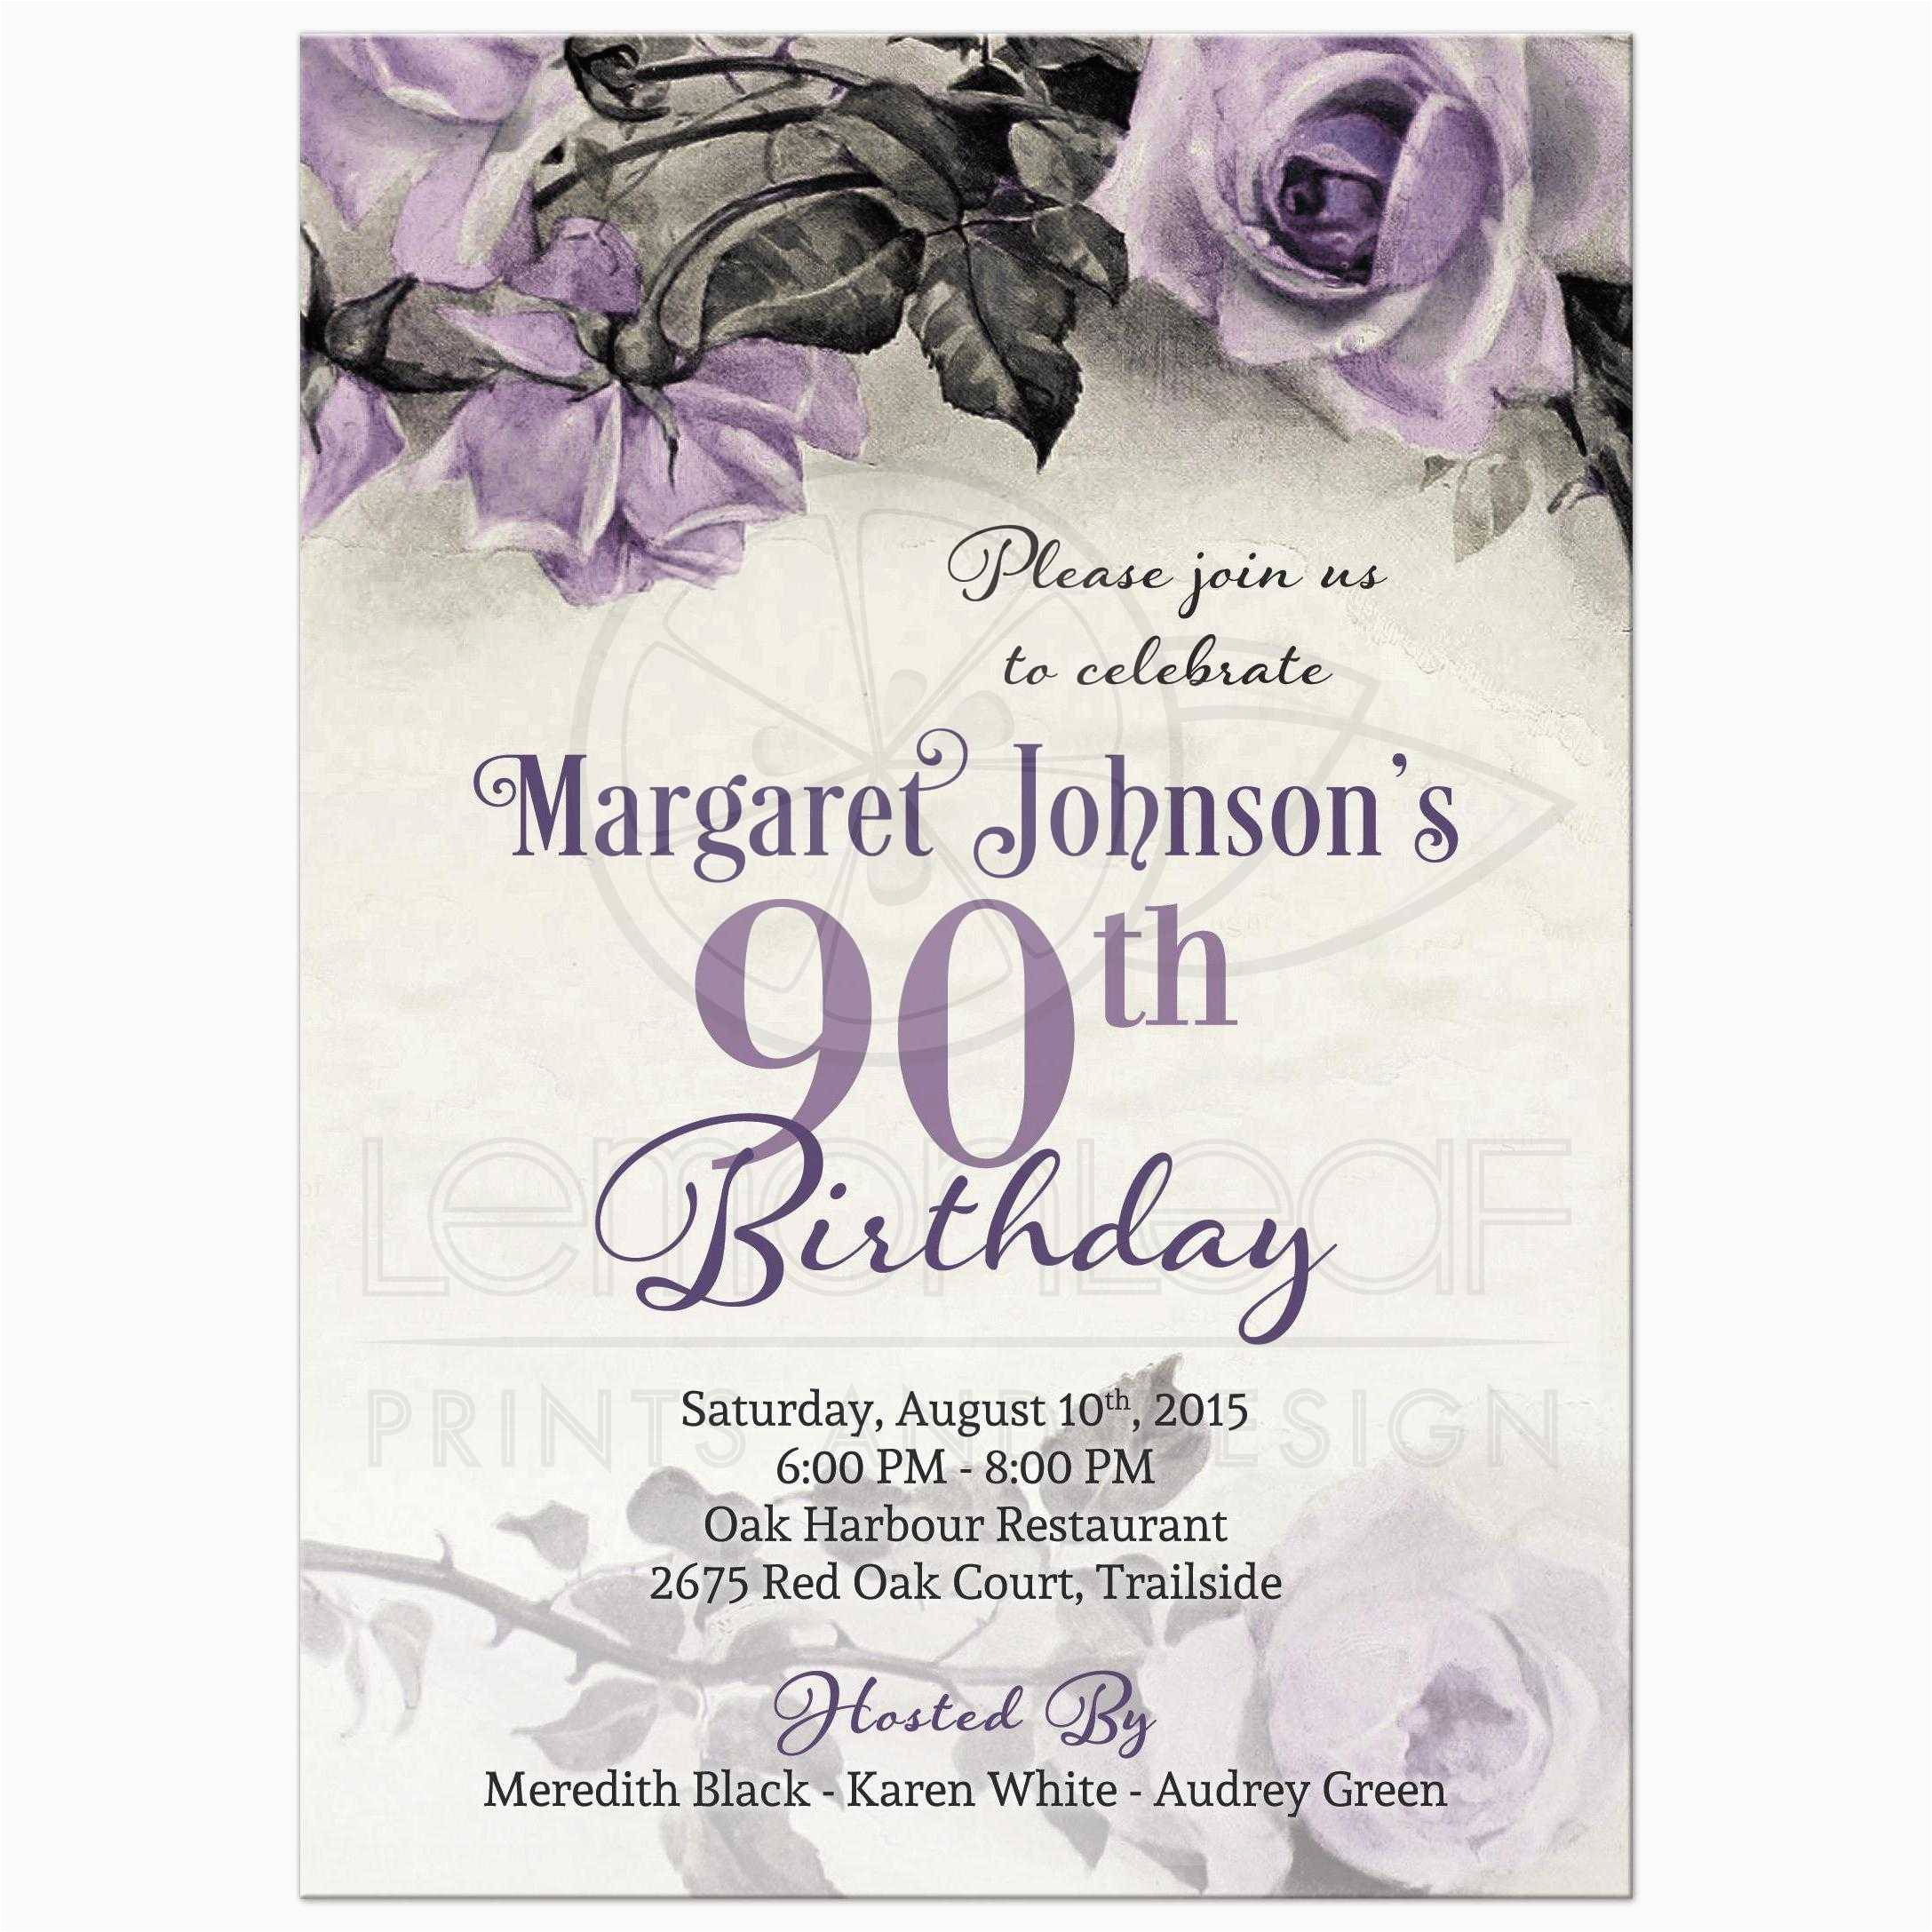 90th Birthday Invitation Wording Samples 90th Birthday Party Invitations Party Invitations Templates